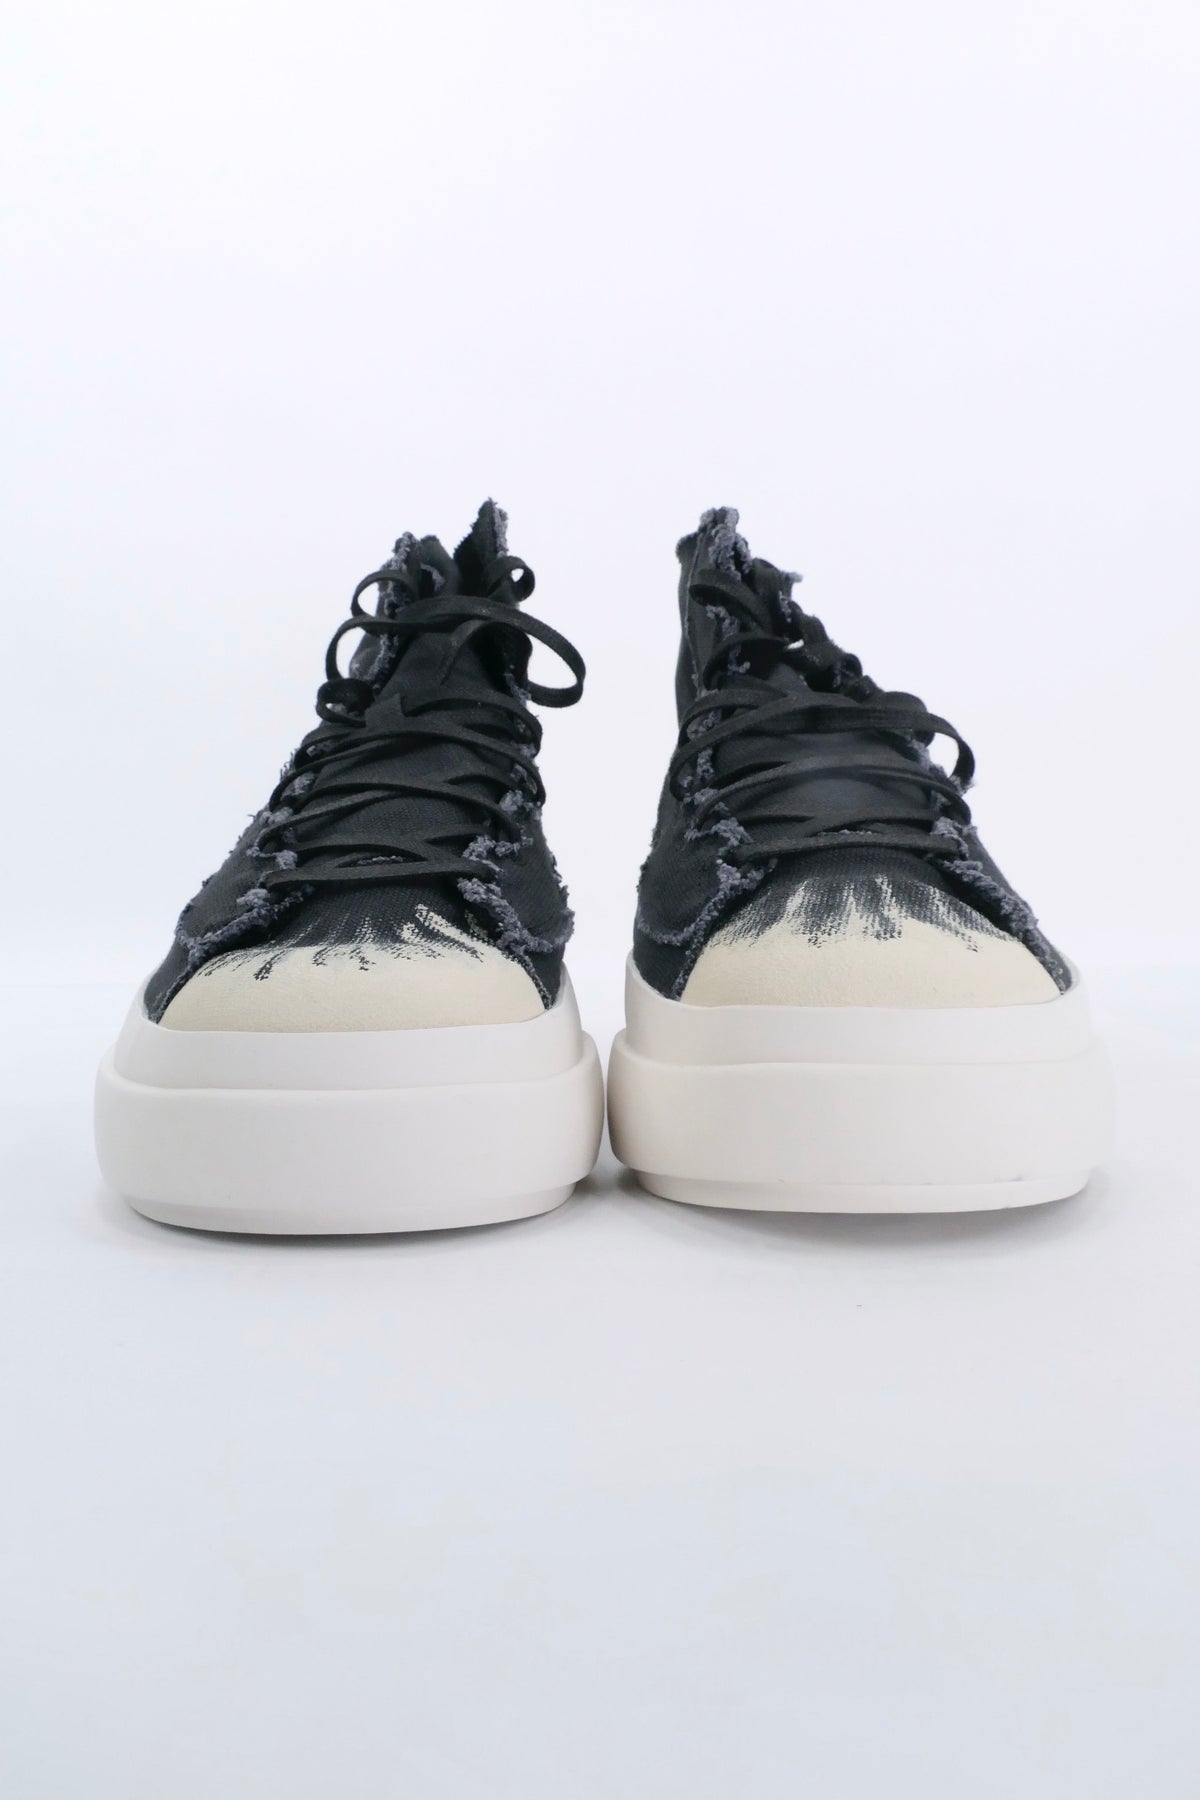 Y-3 Nizza High Sneakers - Black/White